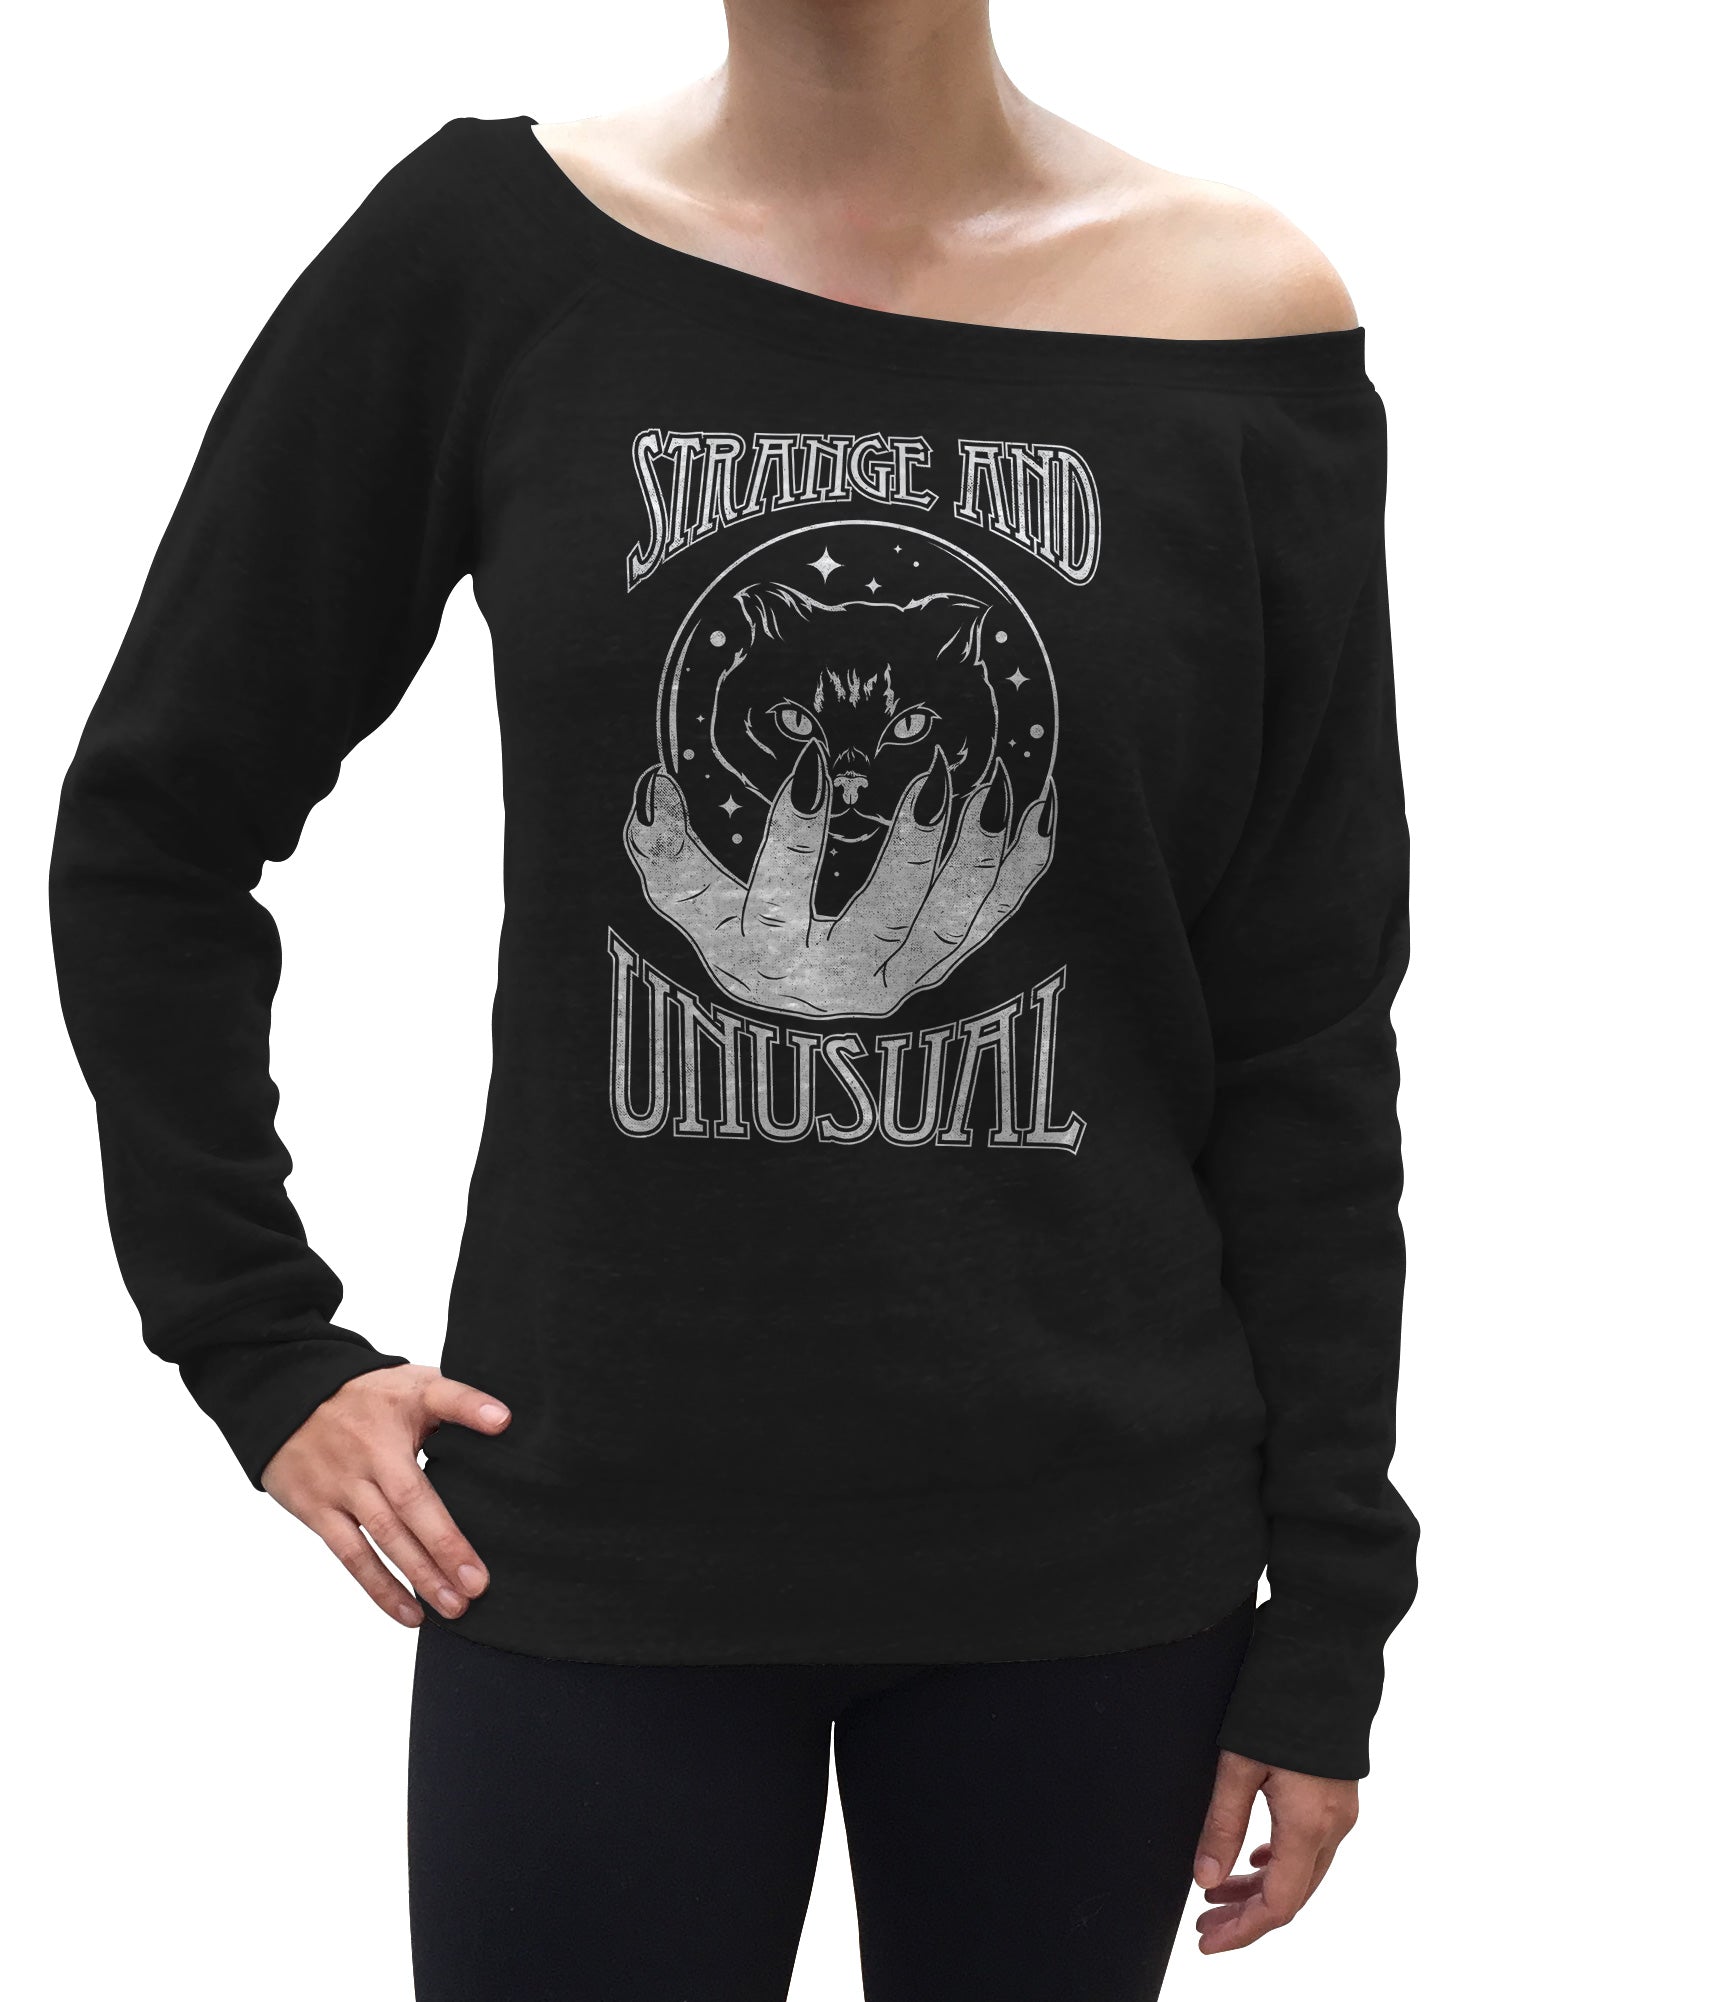 Women's Strange and Unusual Scoop Neck Fleece - Occult shirt - Pastel Goth Shirt - Black Cat Shirt